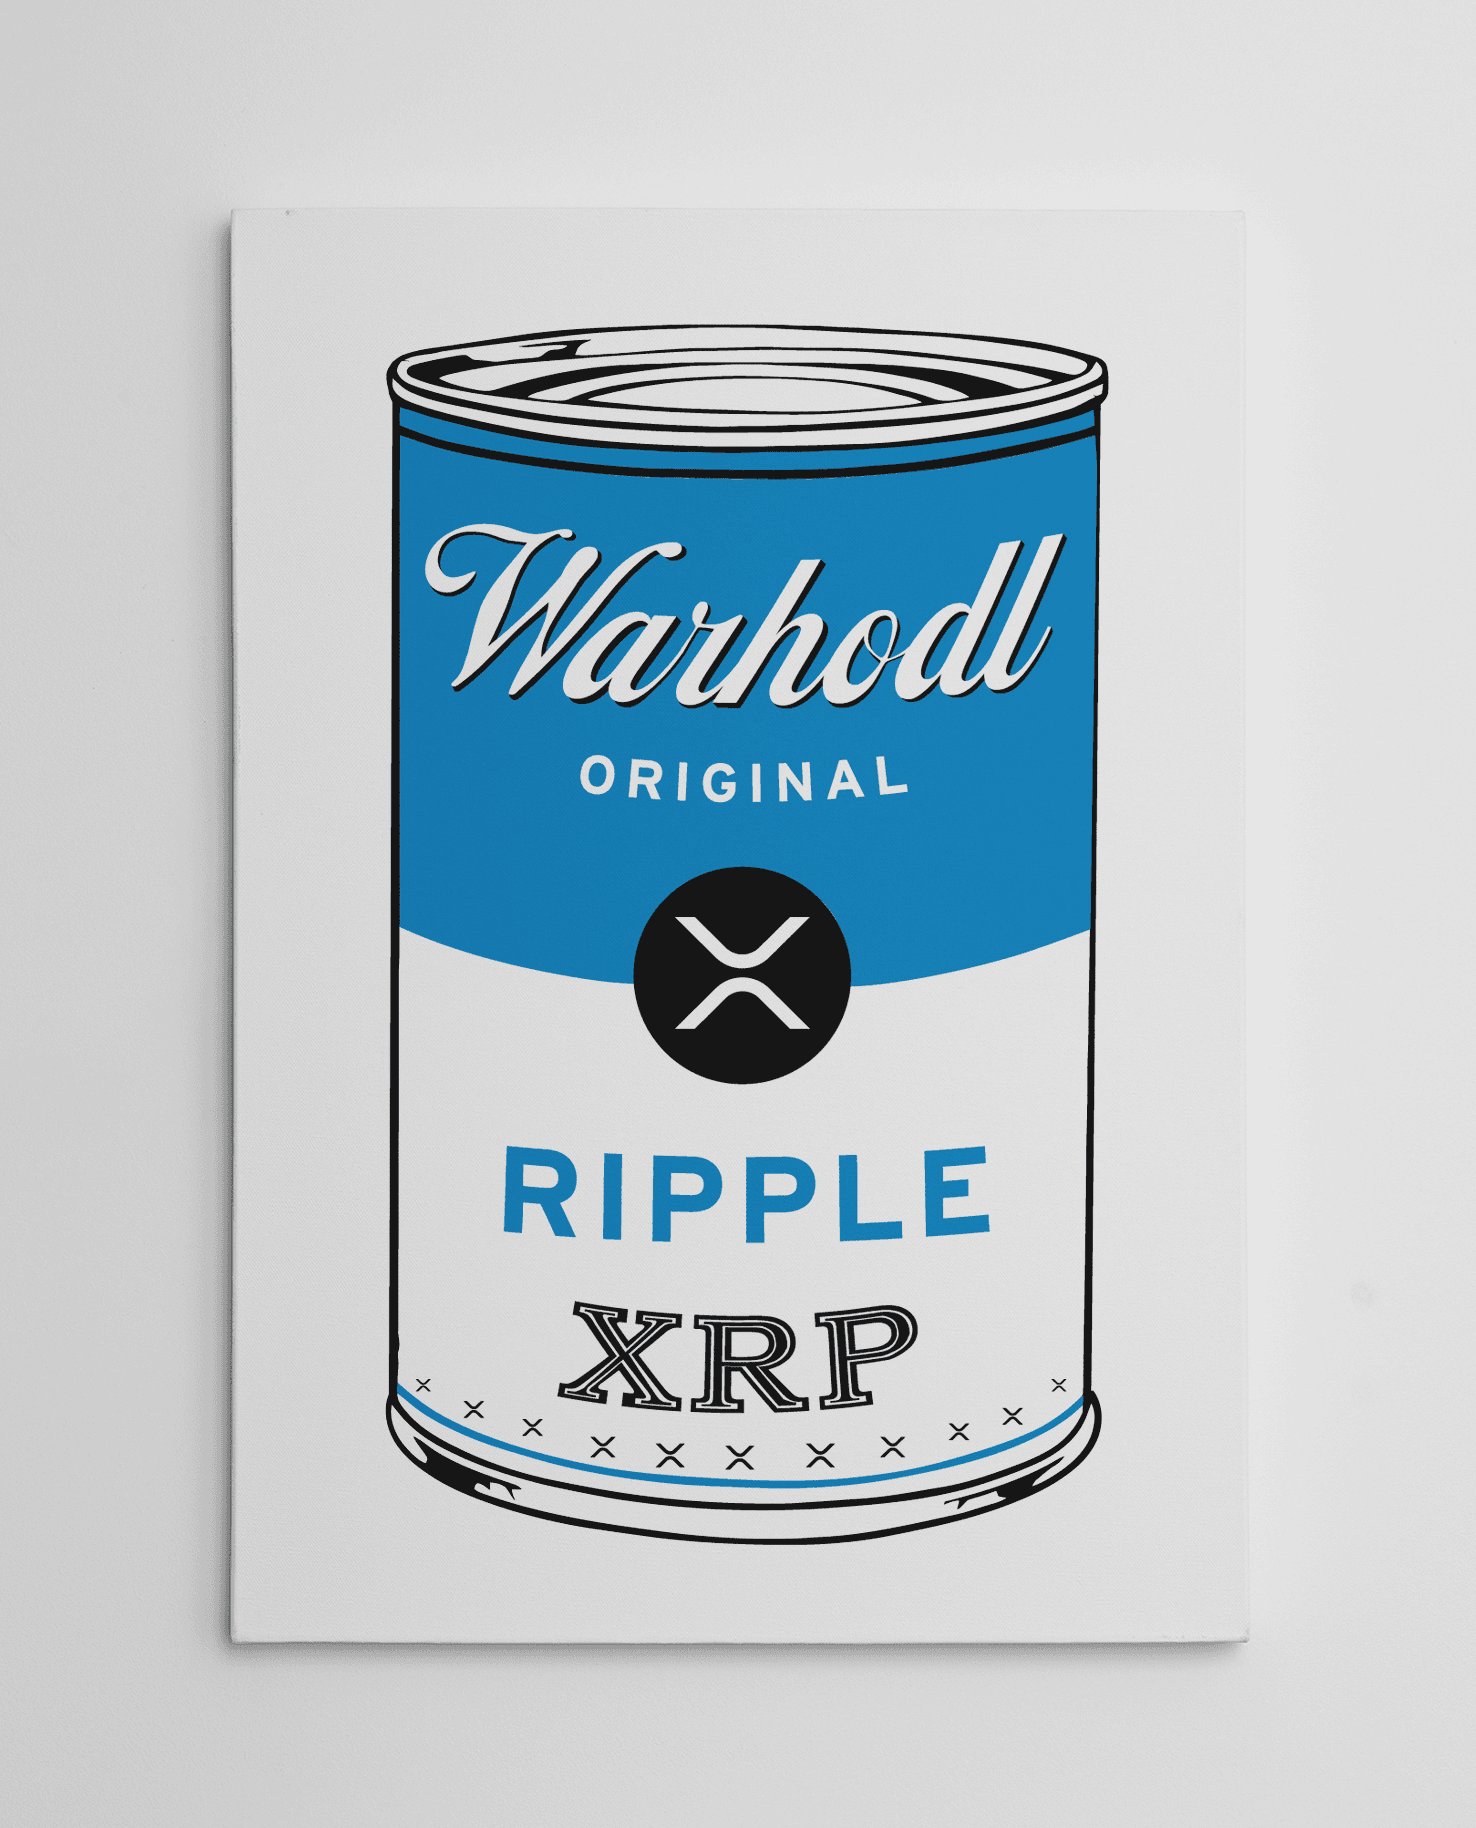 WARHODL Artist Proof "RIPPLE" Original Can